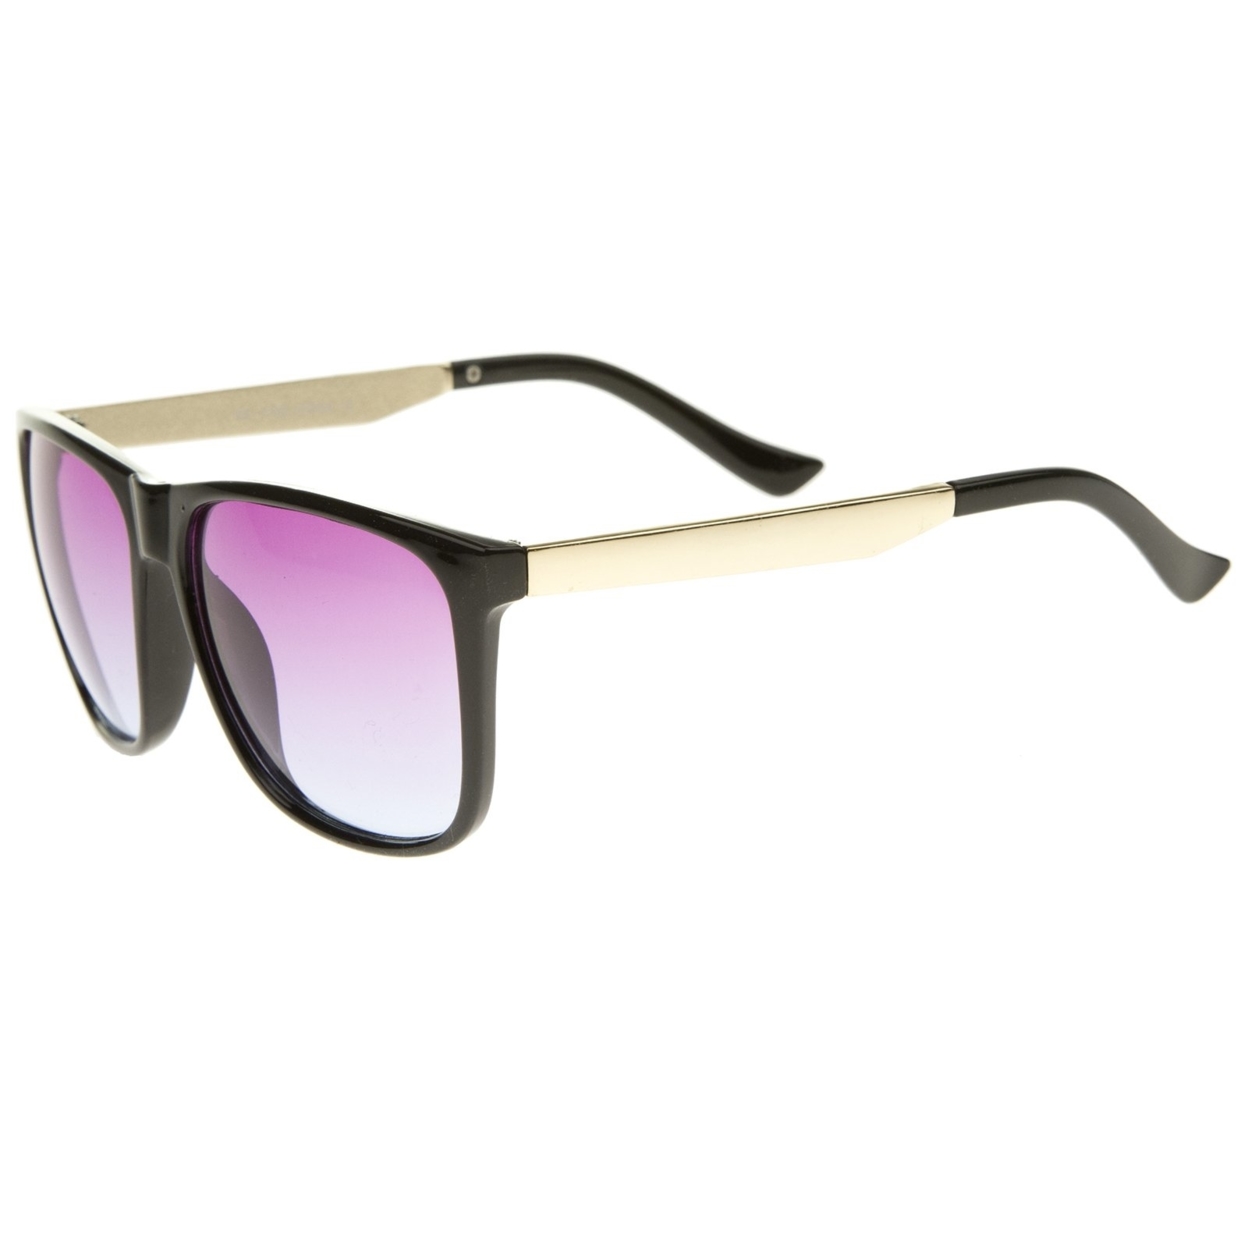 Modern Horn Rimmed Gradient Colored Lens Metal Temple Square Sunglasses 56mm - Black / Pink